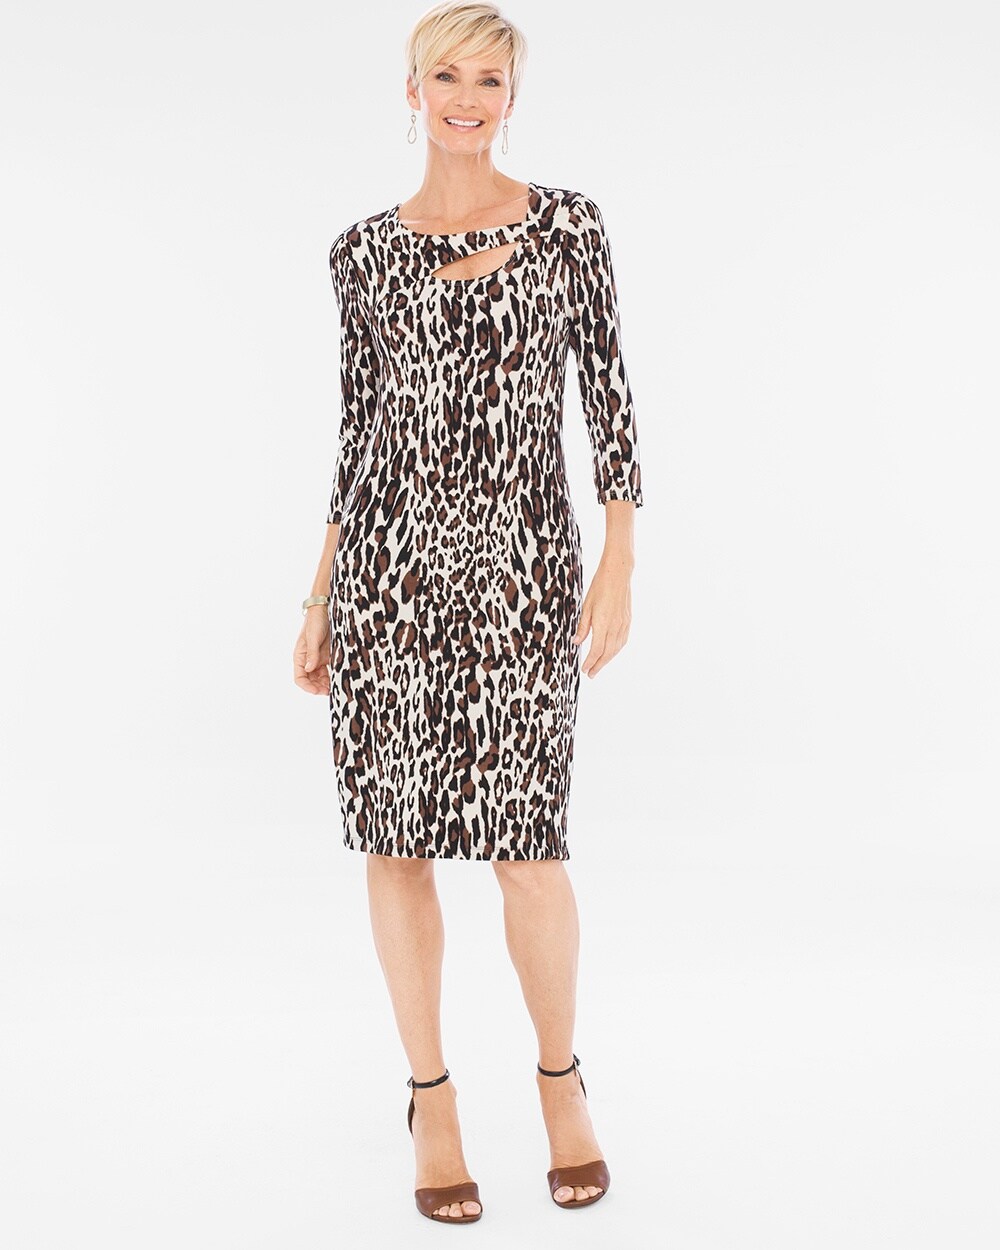 Travelers Classic Cheetah-Print Dress